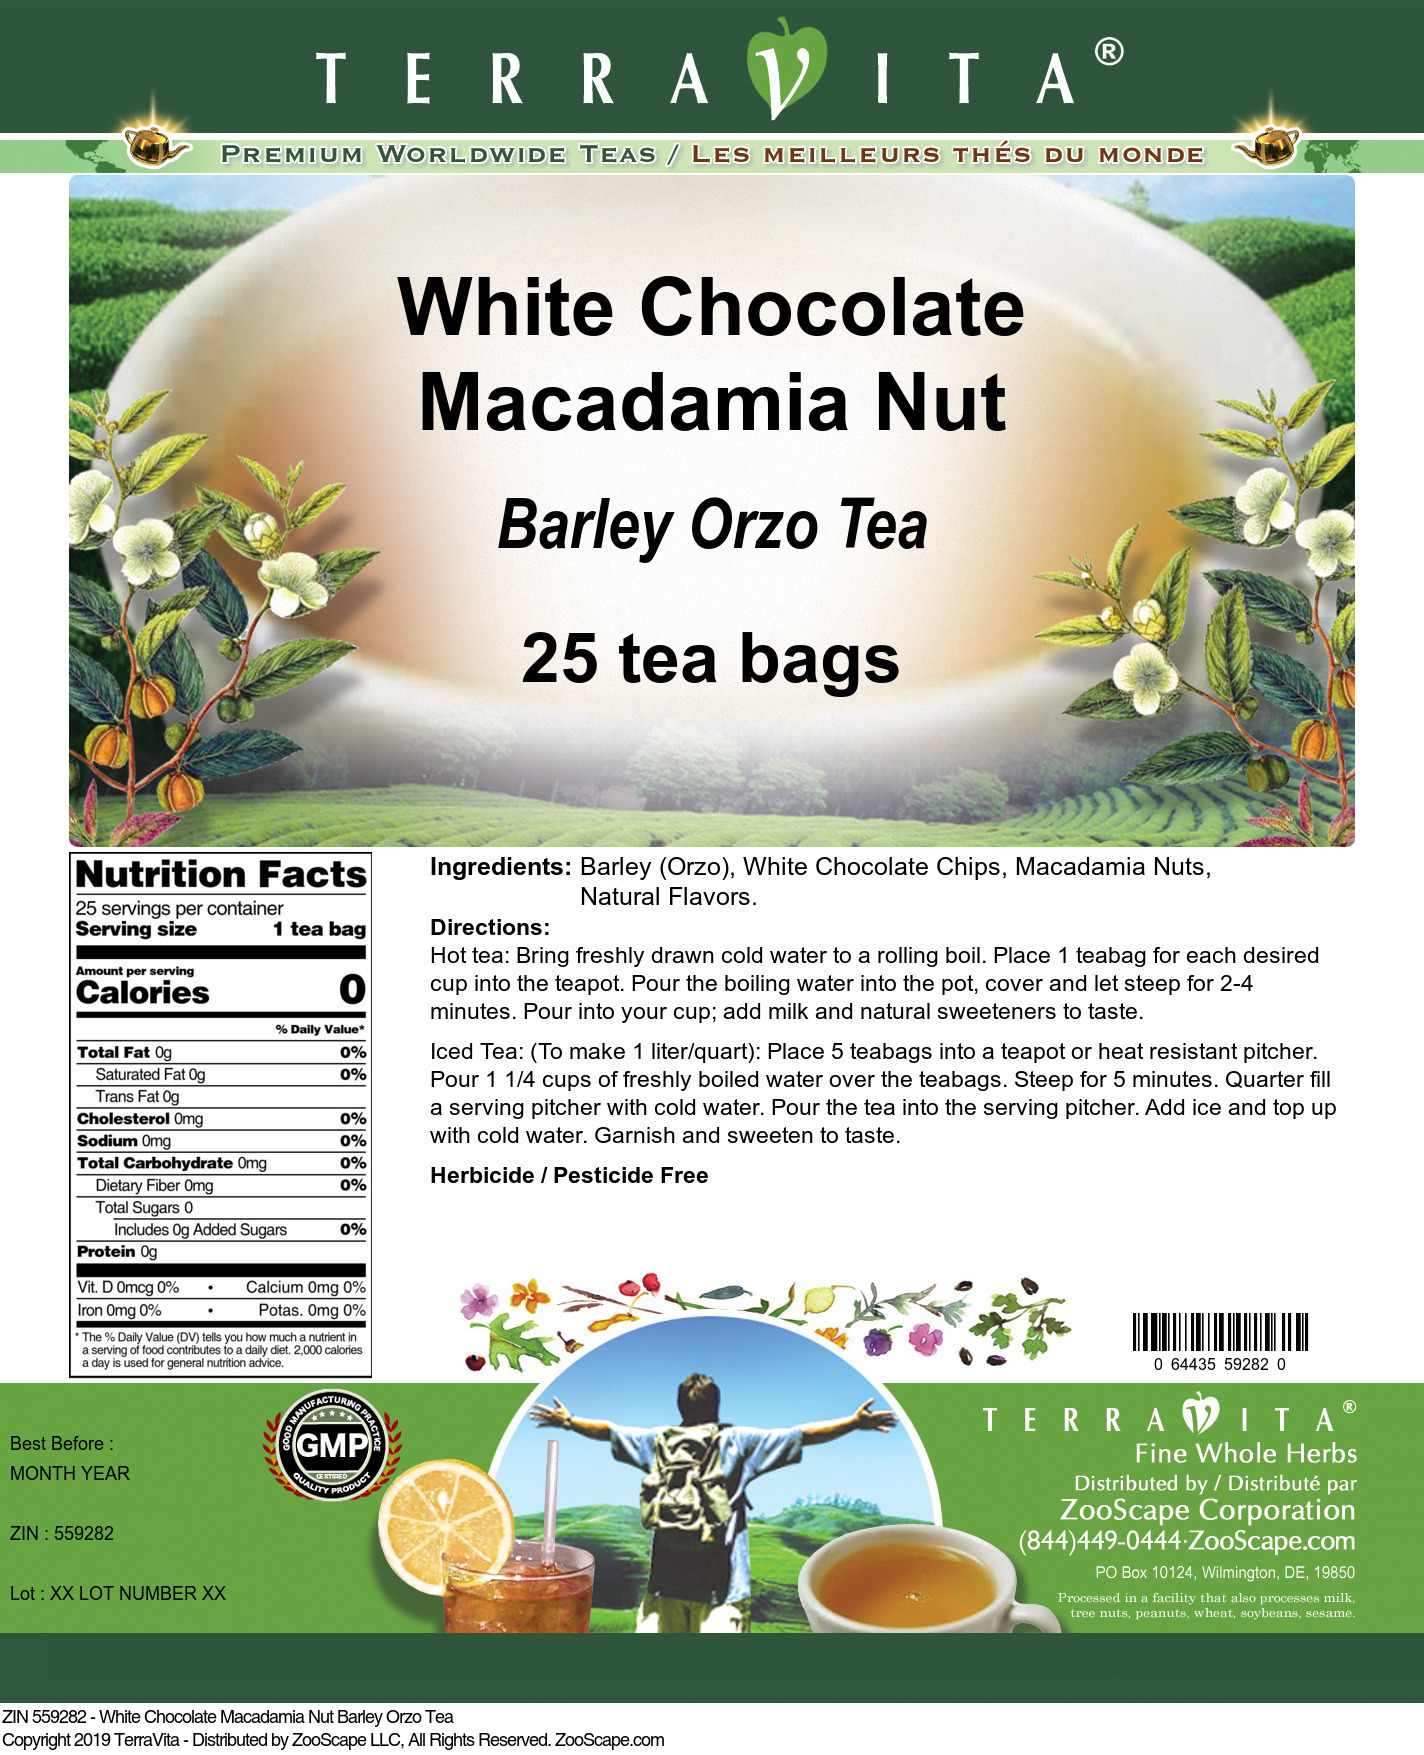 White Chocolate Macadamia Nut Barley Orzo Tea - Label